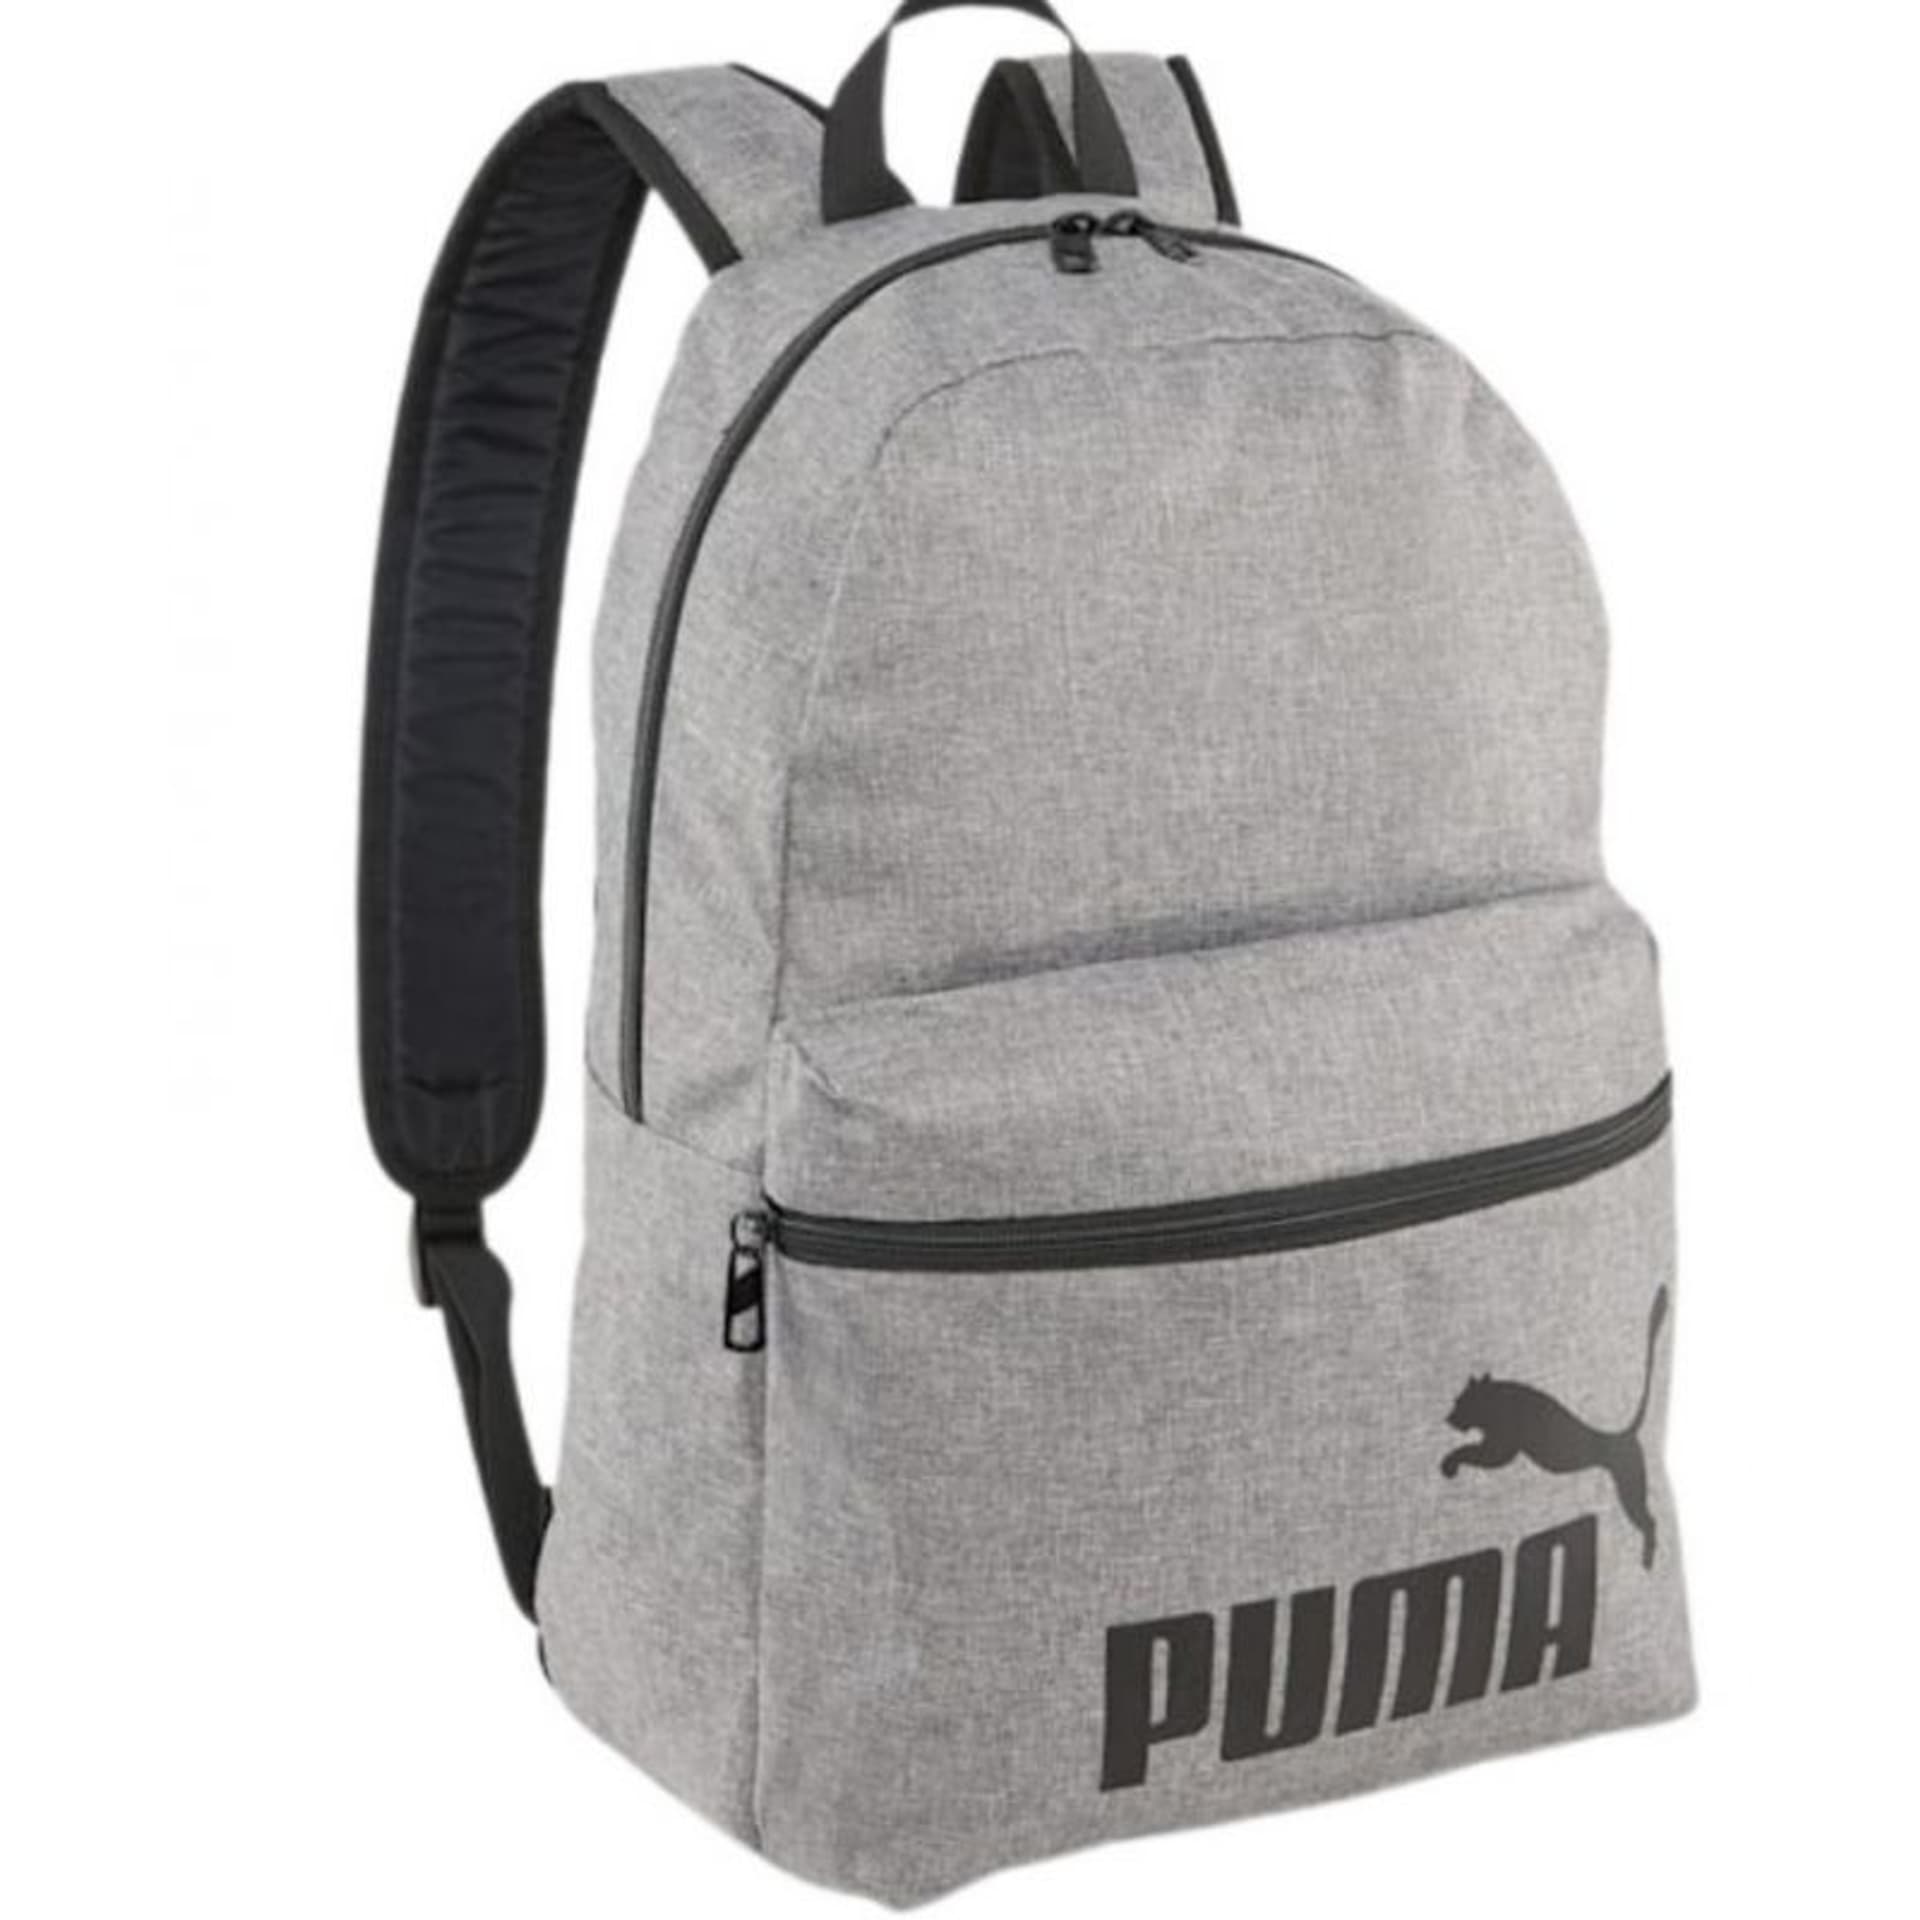 Plecak Puma Phase III 90118 (kolor Szary/Srebrny)